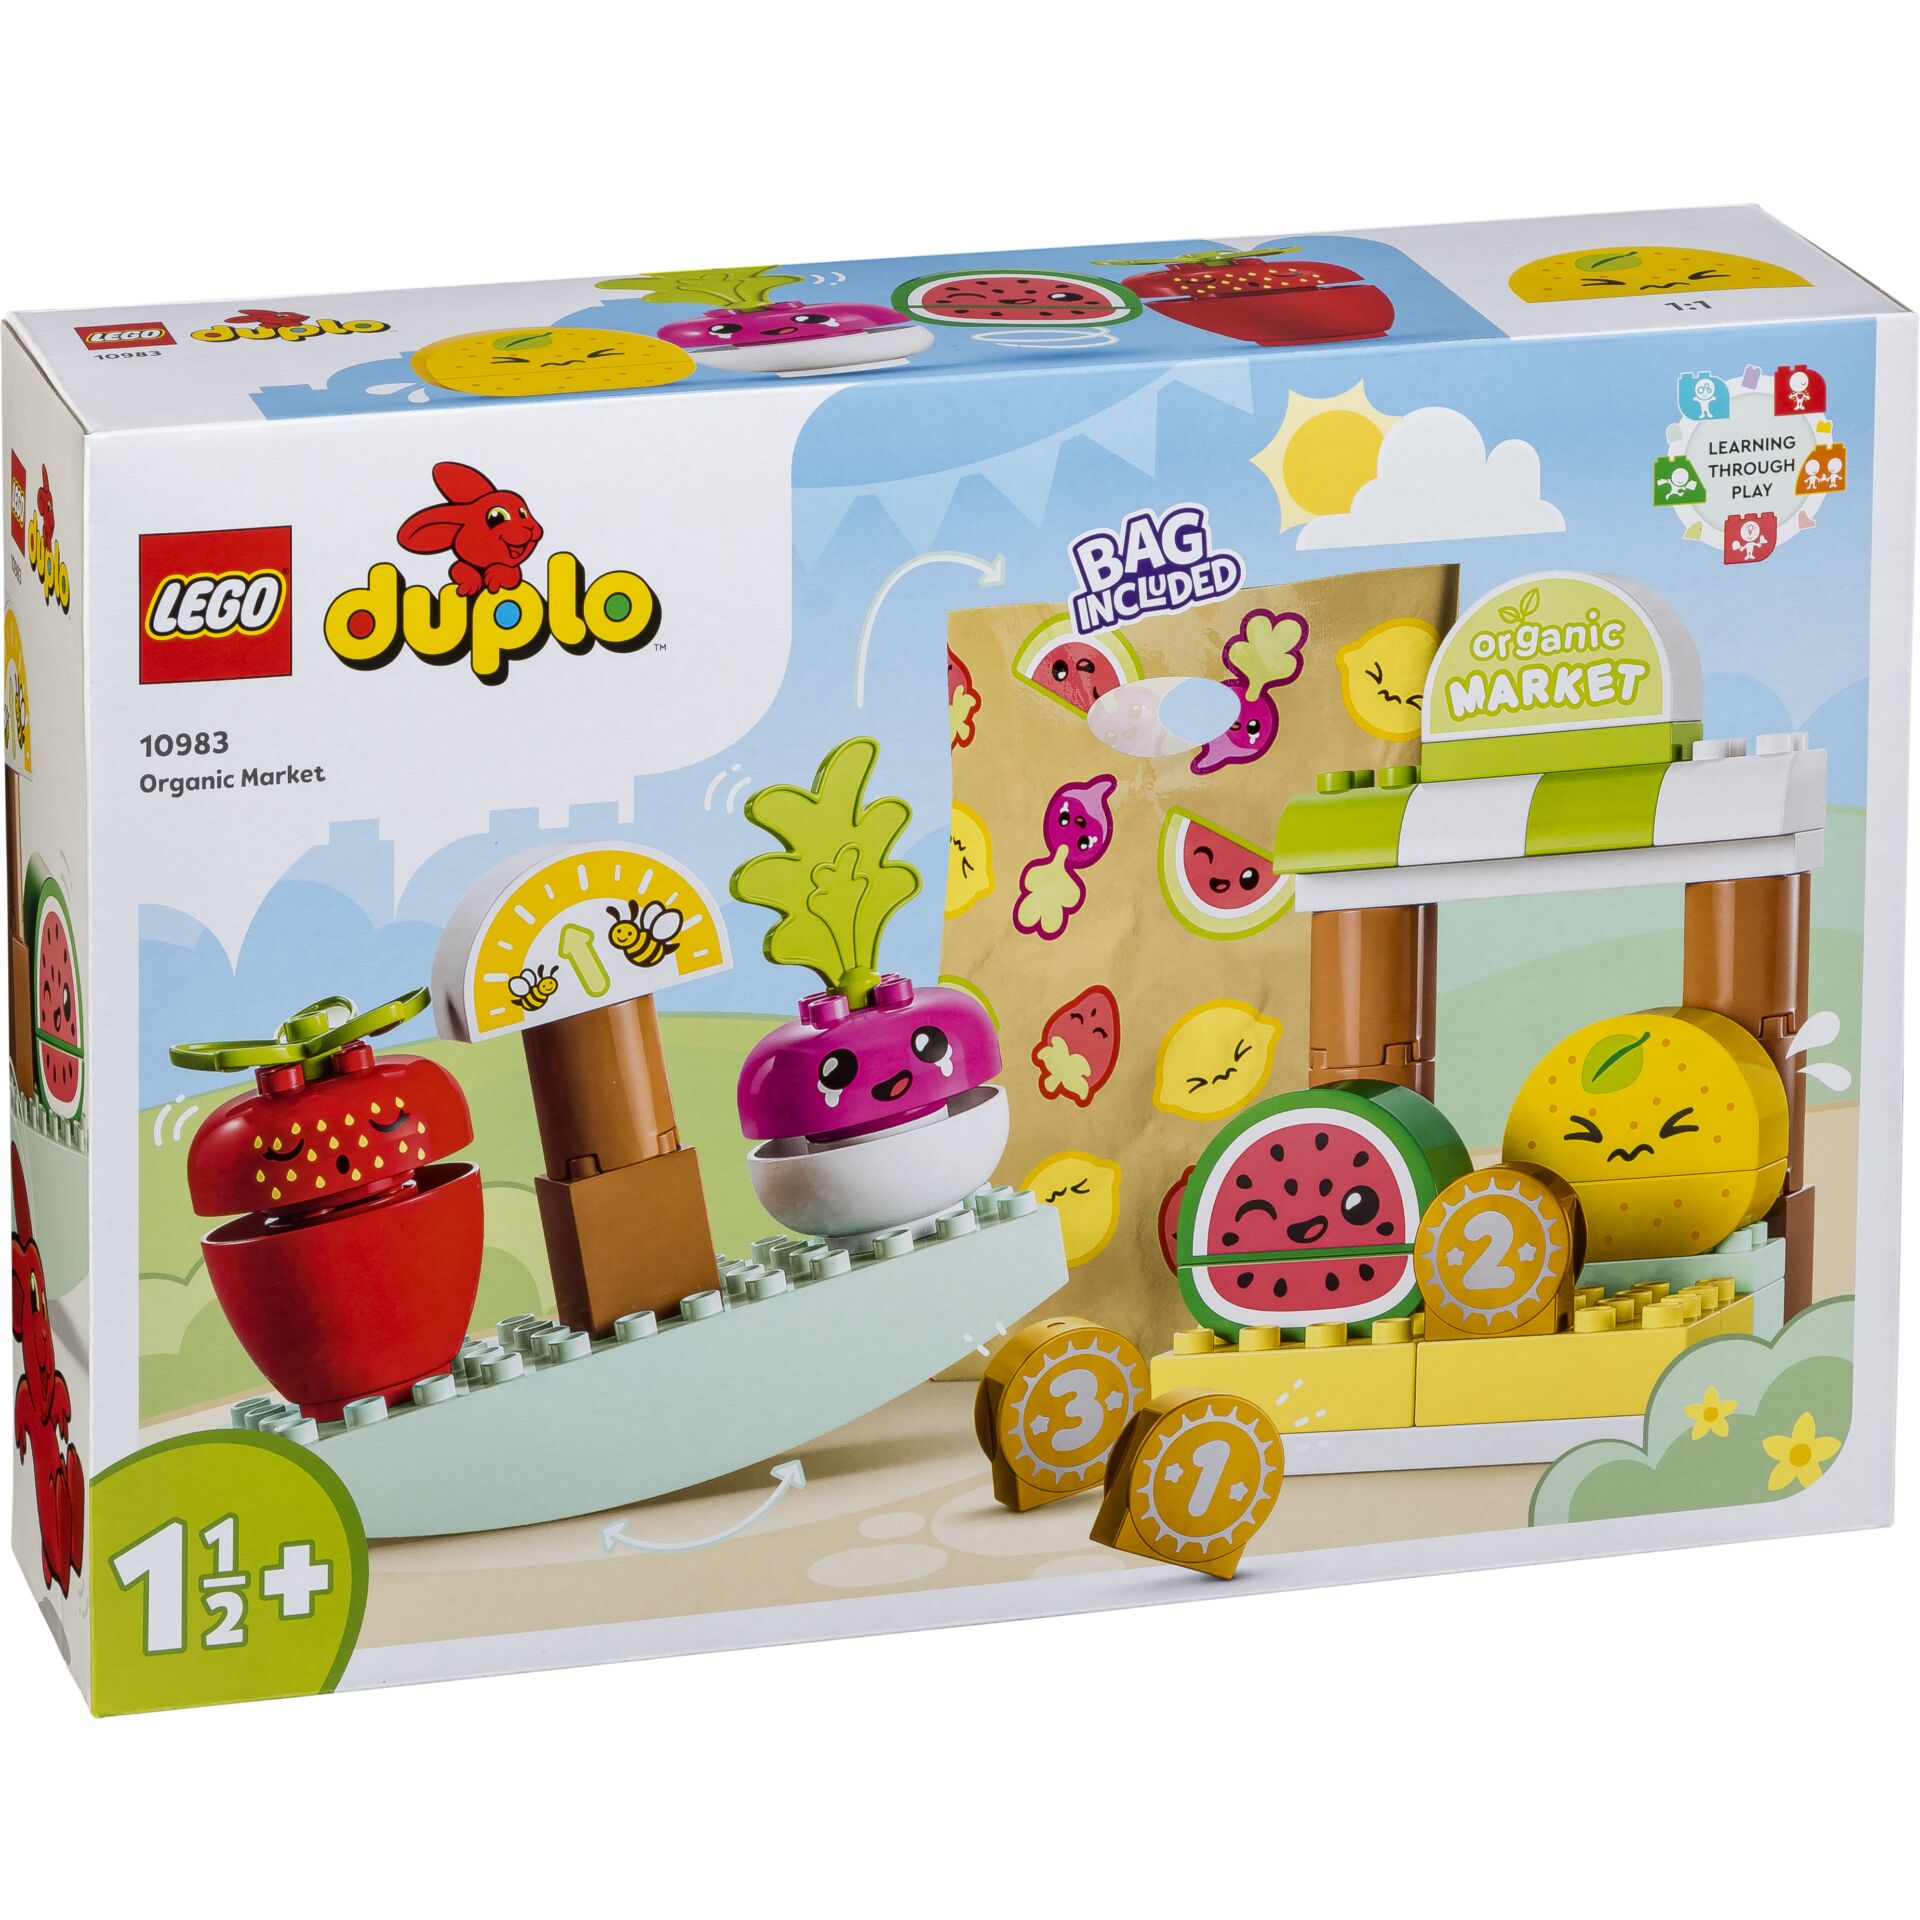 Toys/Spielzeug Lego Biomarkt -Konstruktionsspielzeug 10983 DUPLO -Lego